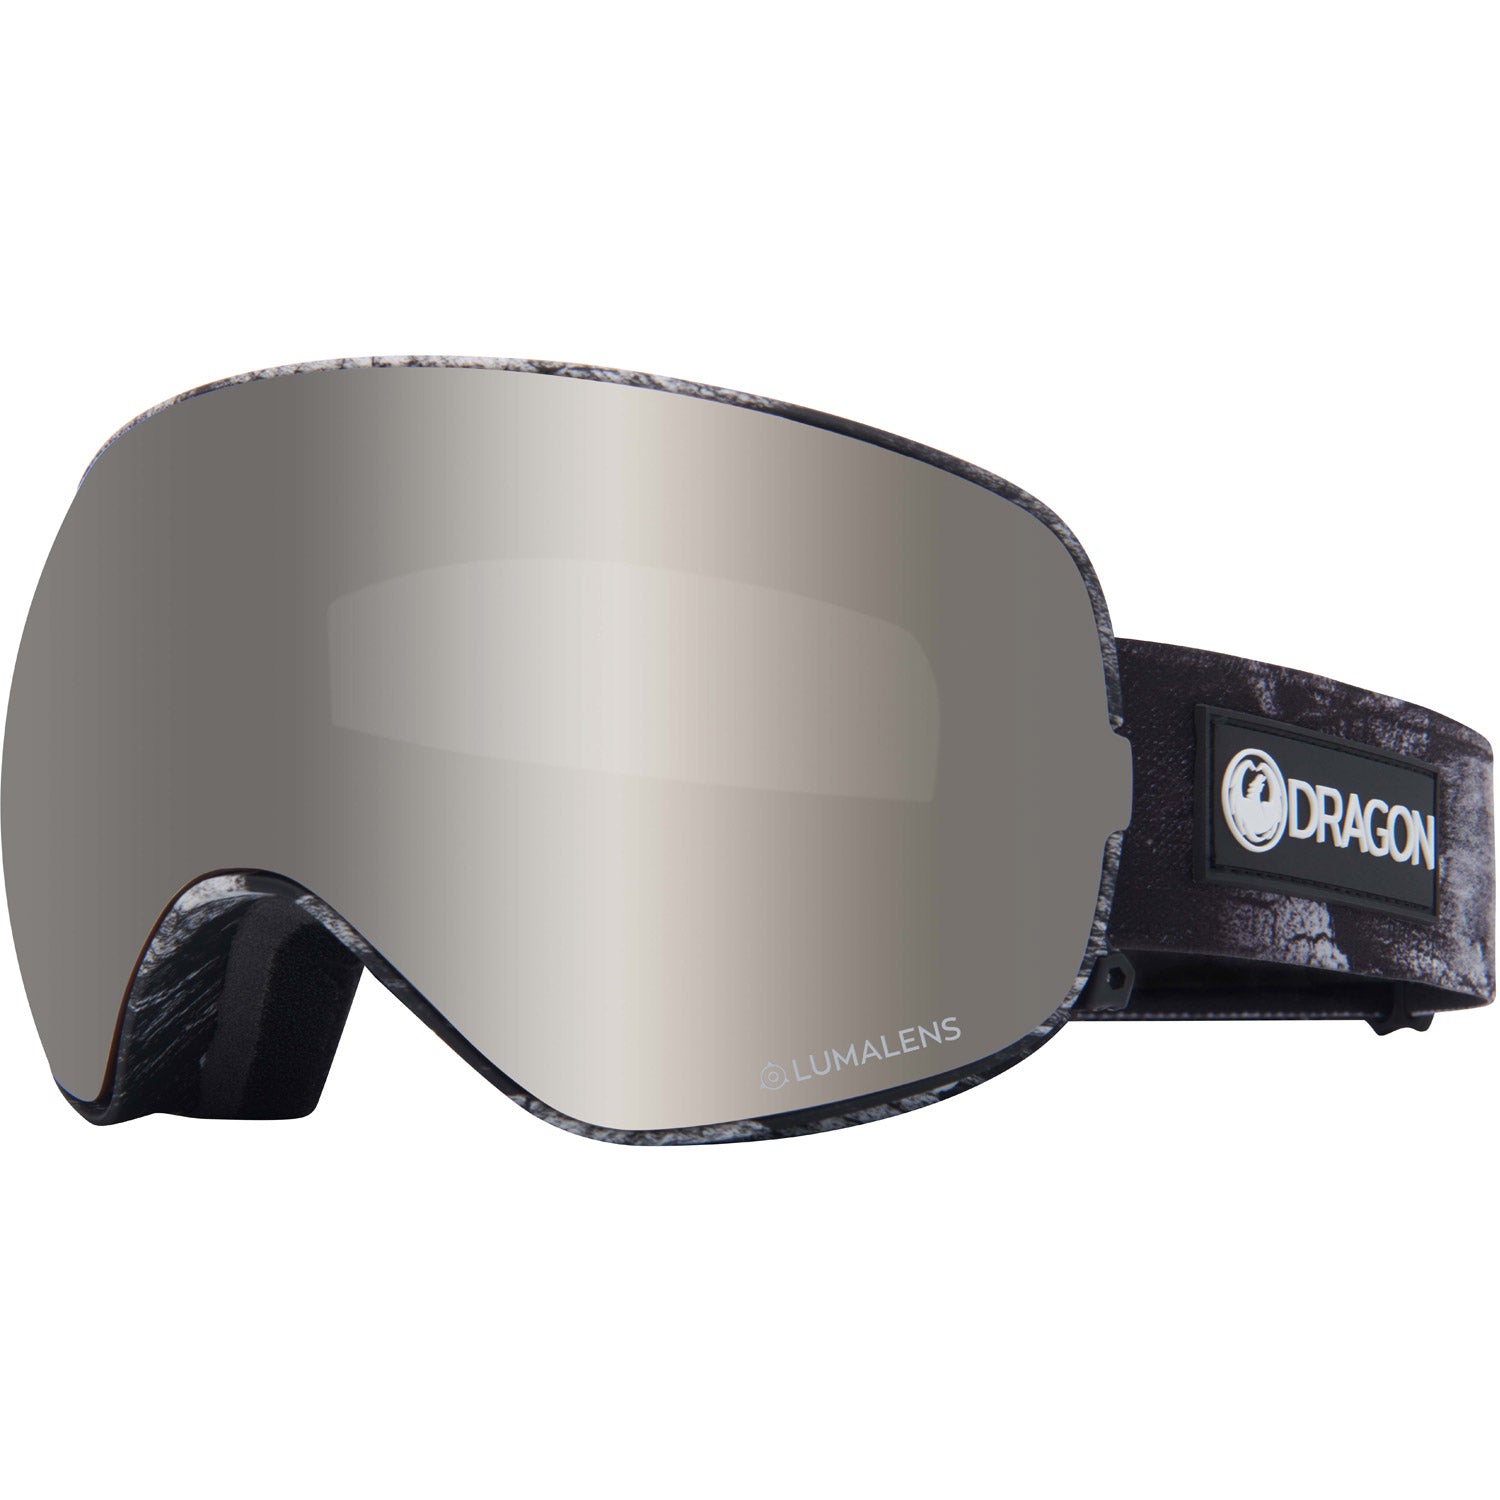 Dragon X2s Goggle 2020 Bayside - Lumalens Green Ion w/ Lumalens Amber Lens